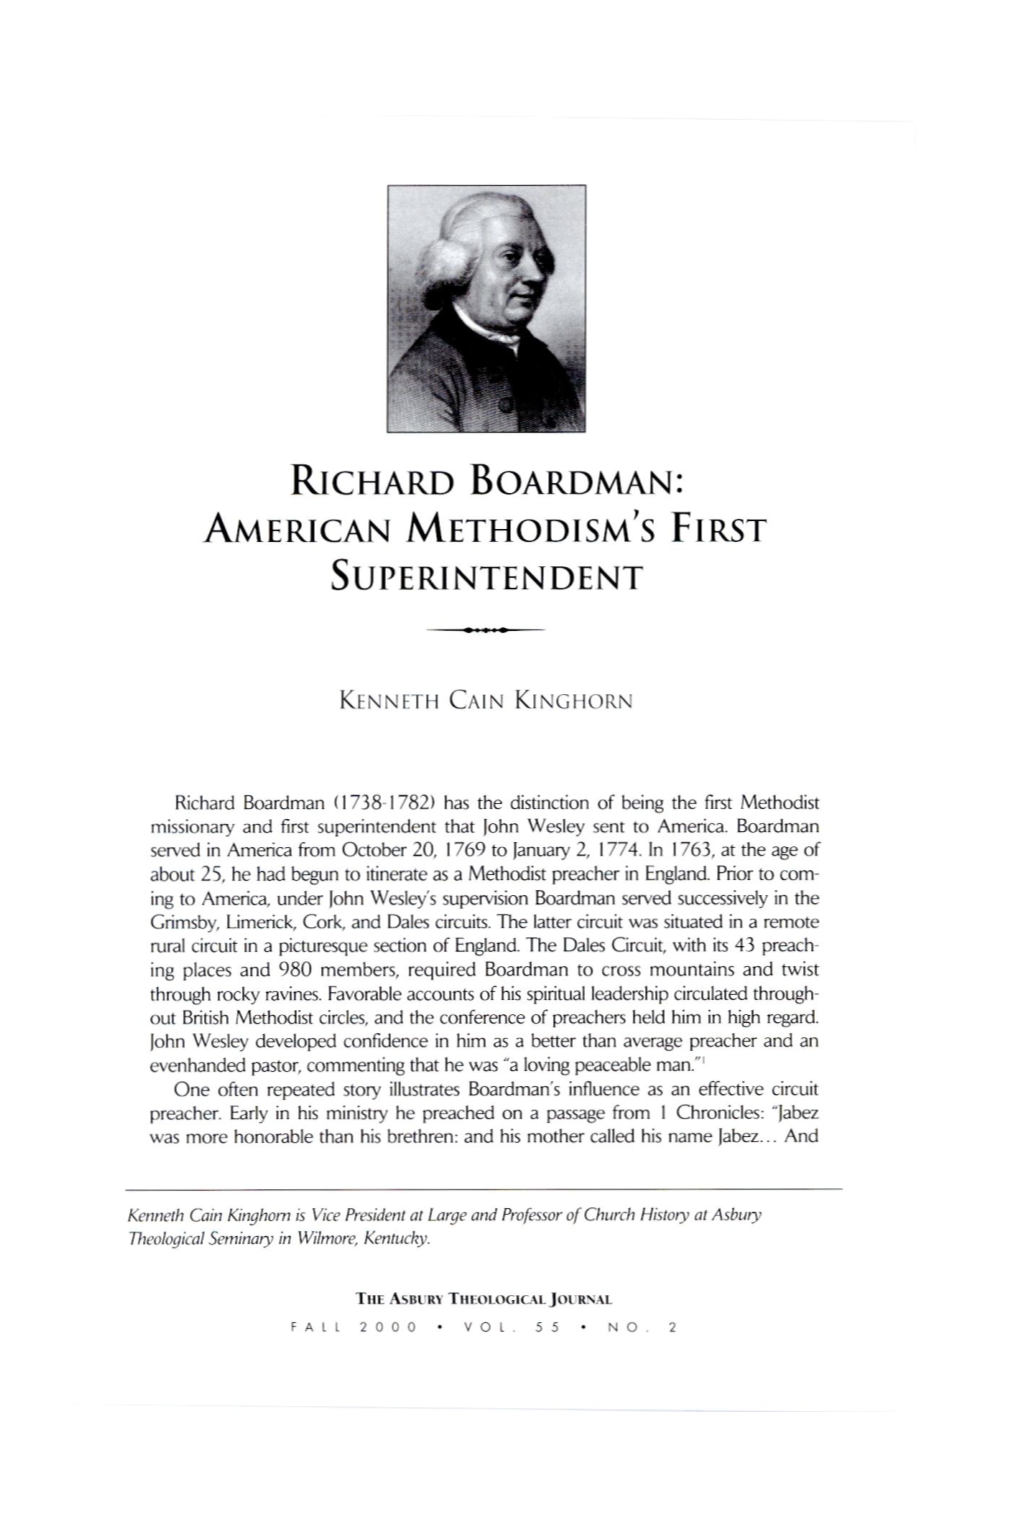 Richard Boardman: American Methodism's First Superintendent